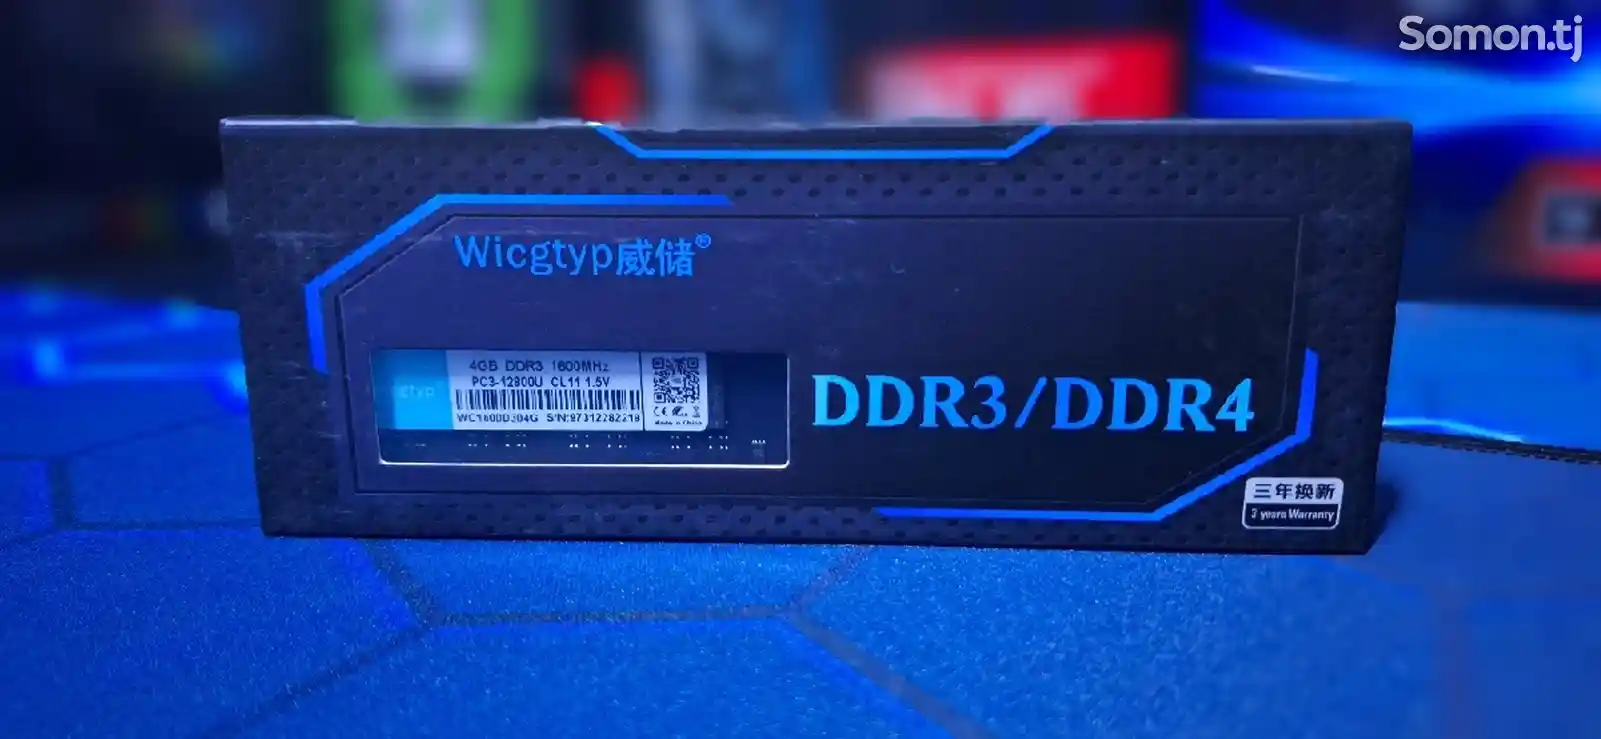 Оперативная память Wicgtyp 4GB DDR3-2